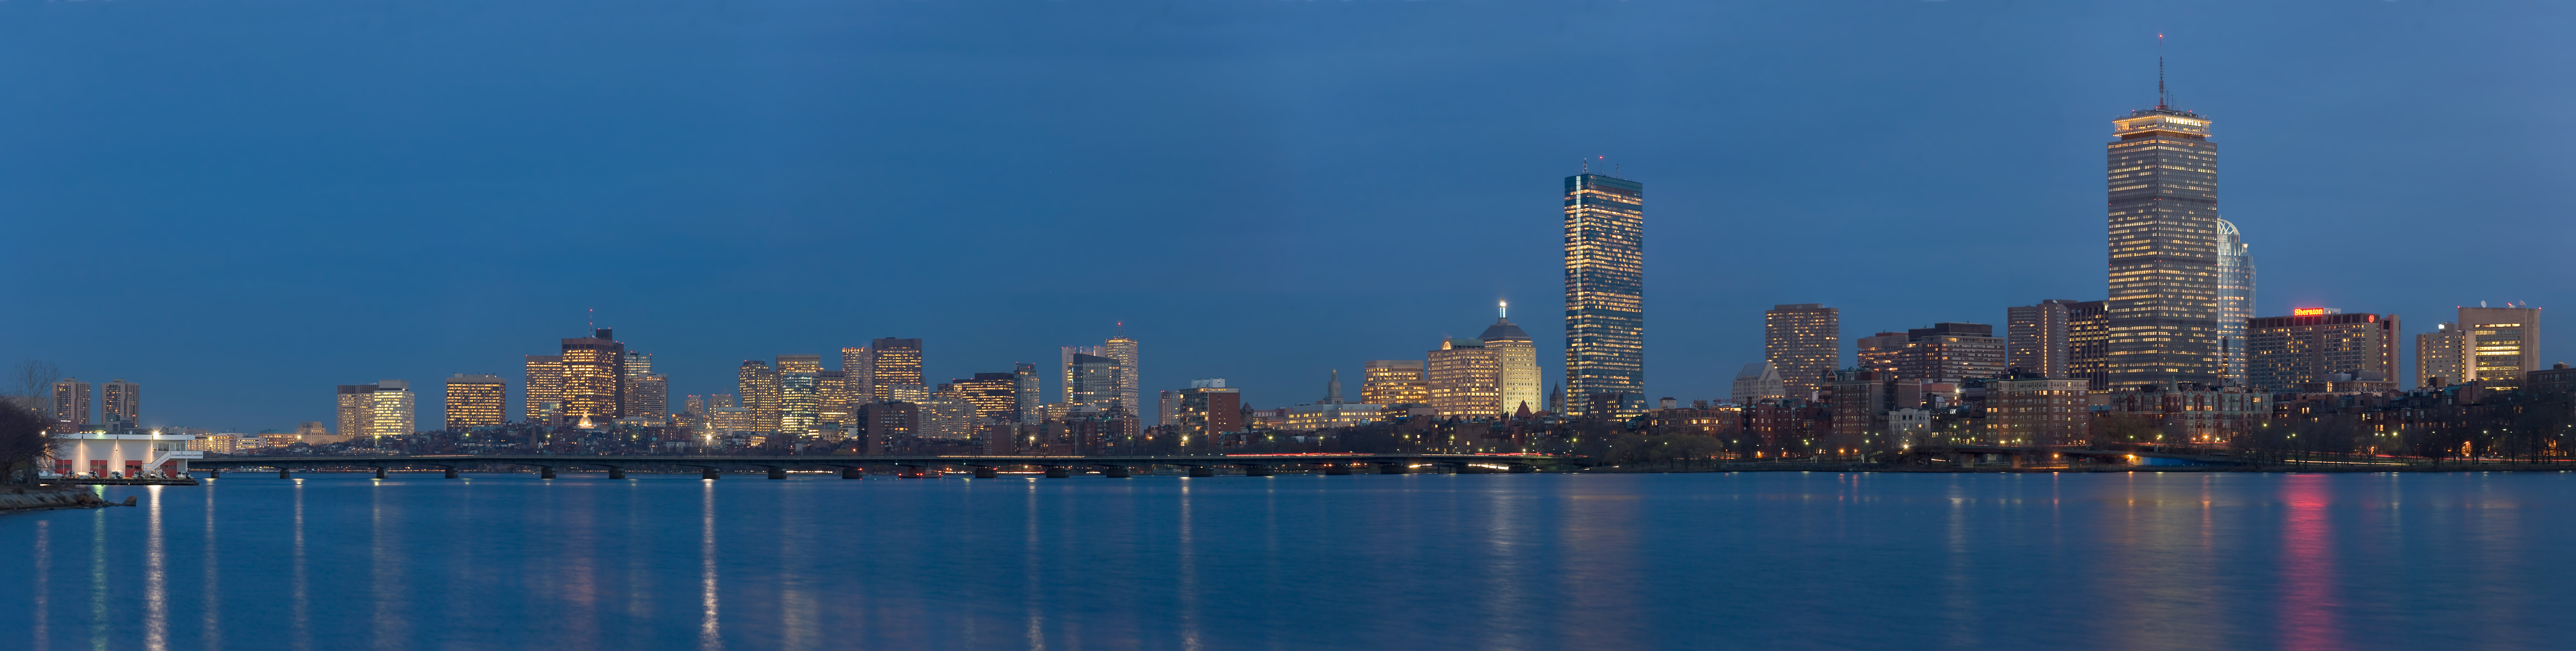 Boston_Twilight_Panorama_3.jpg